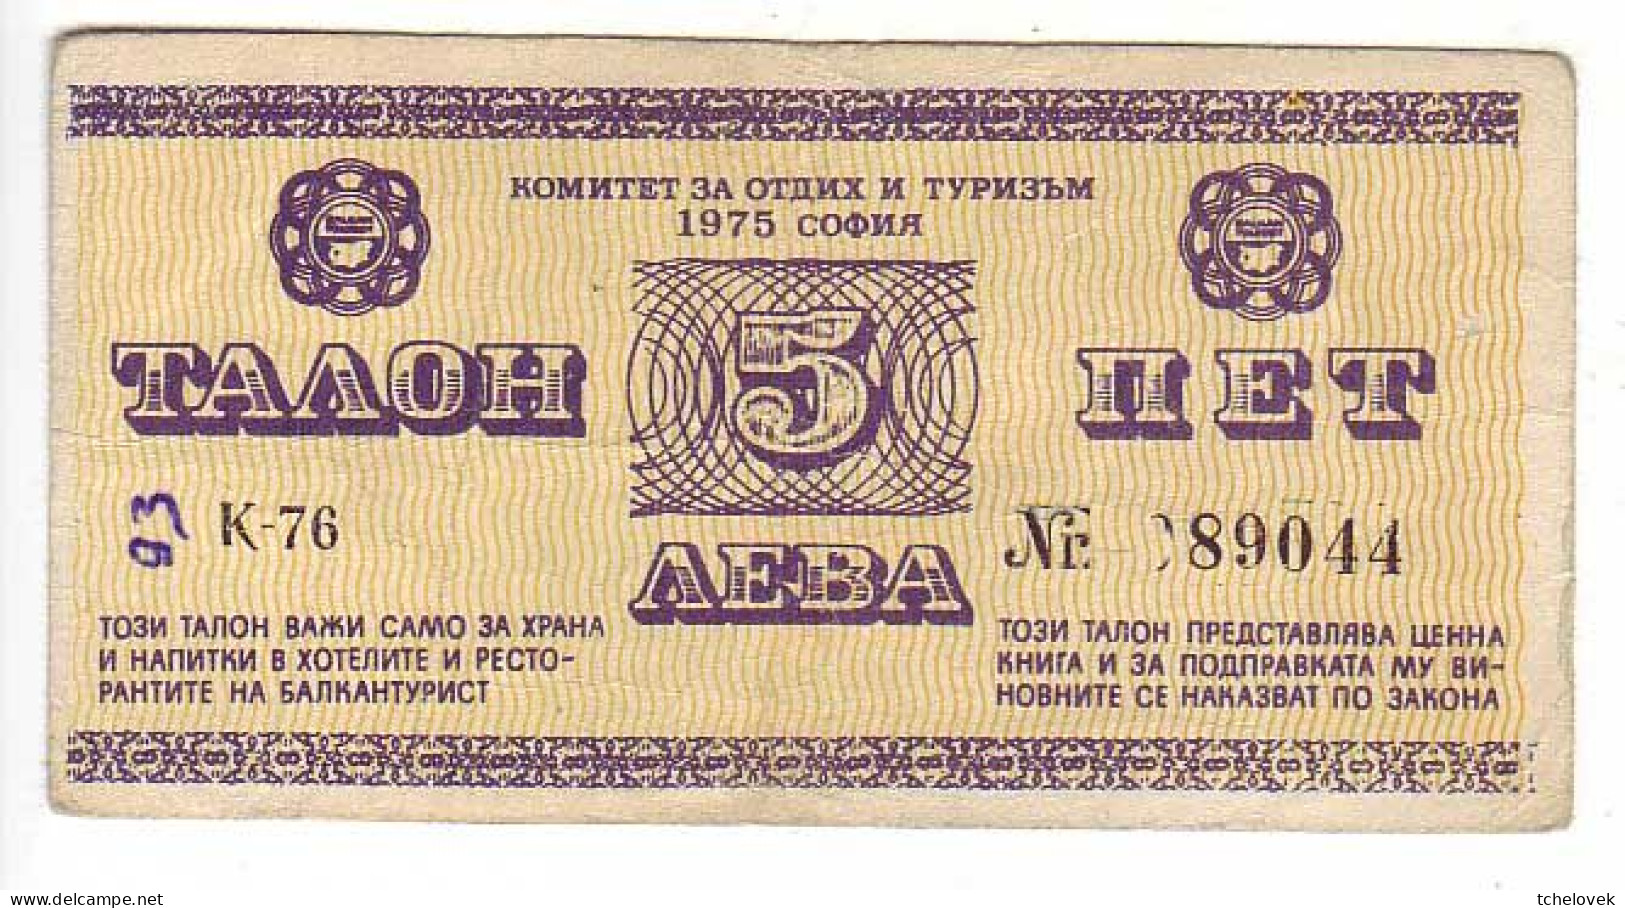 (Billets). Bulgarie Bulgaria. Foreing Exchange Certificate. Rare. Balkan Tourist. 1975. 5 Leva Serie K-76 N° 089044 - Bulgarie